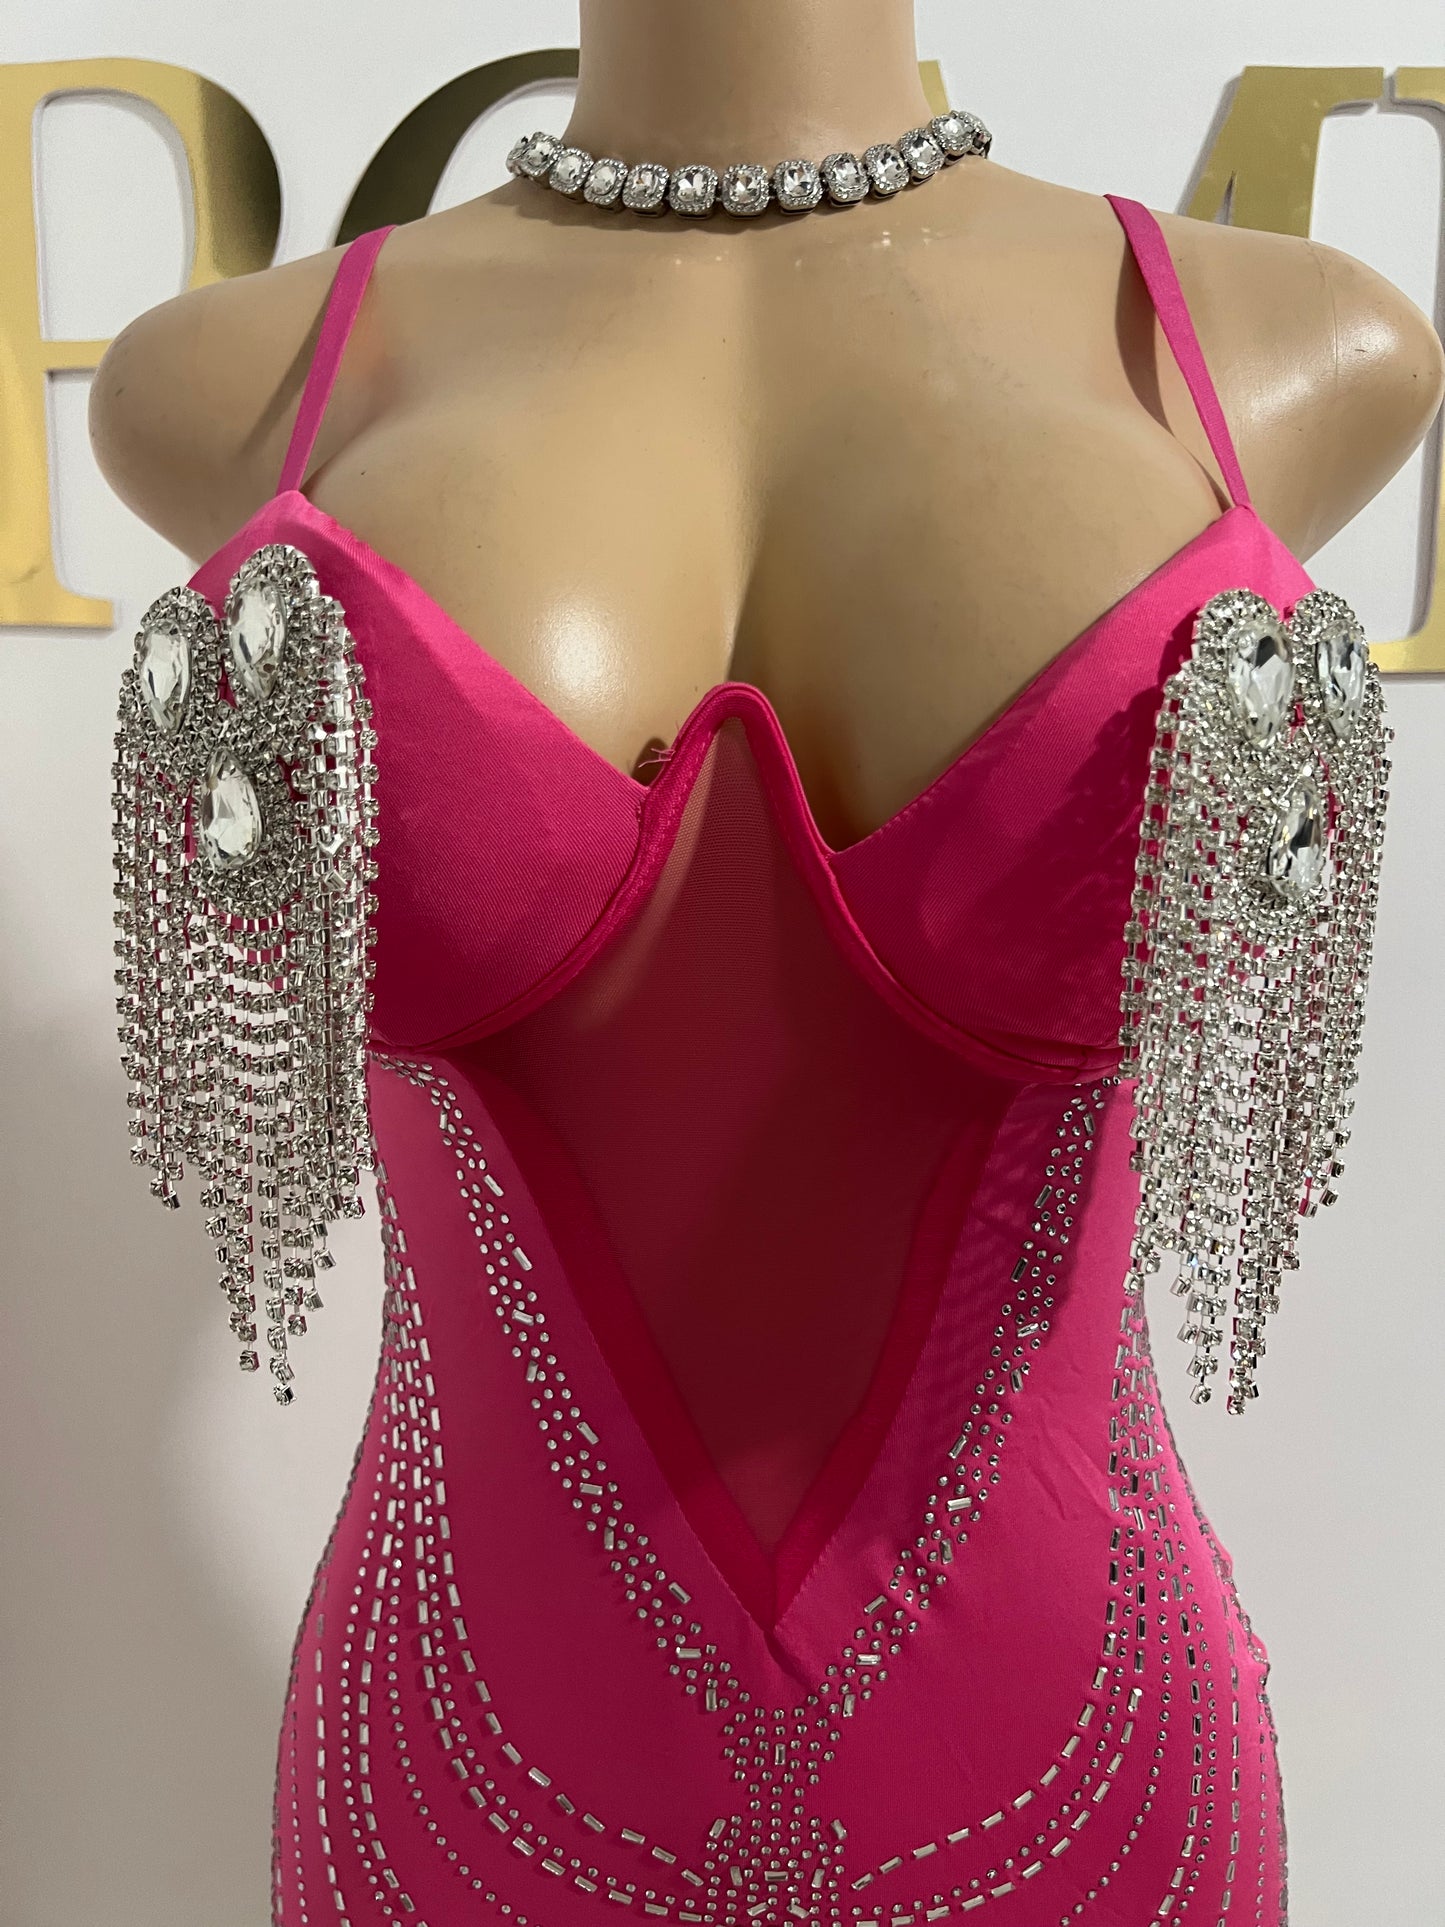 Dazzle Medusa Crystal Dress (Pink)